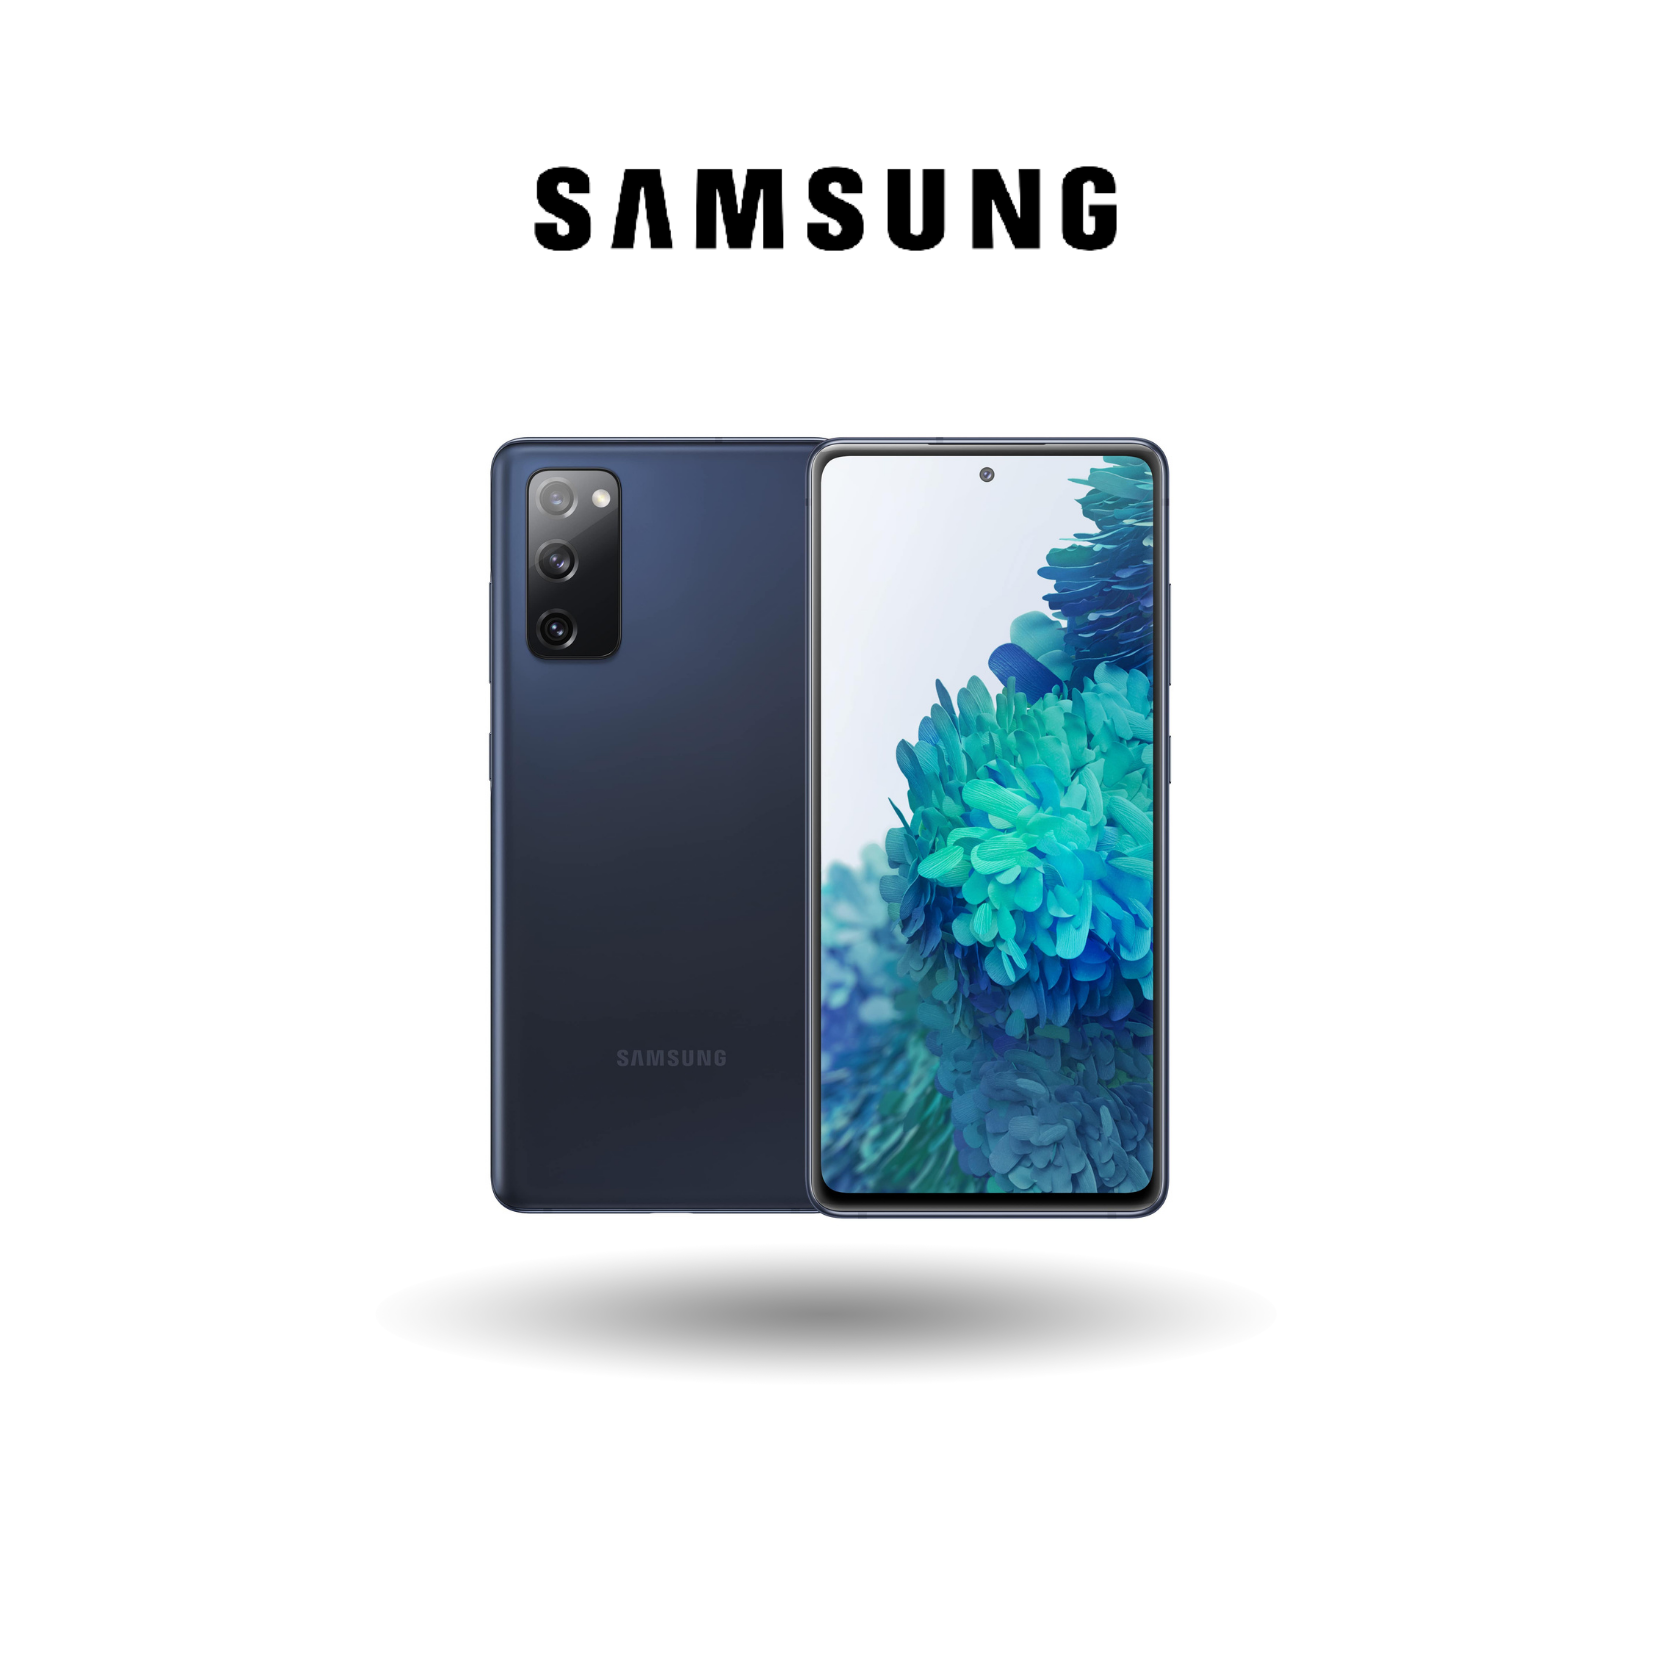 Samsung Galaxy S20 FE LTE - 8GB RAM + 128GB ROM | Qualcomm Snapdragon 865 | 4500mAh Large Battery